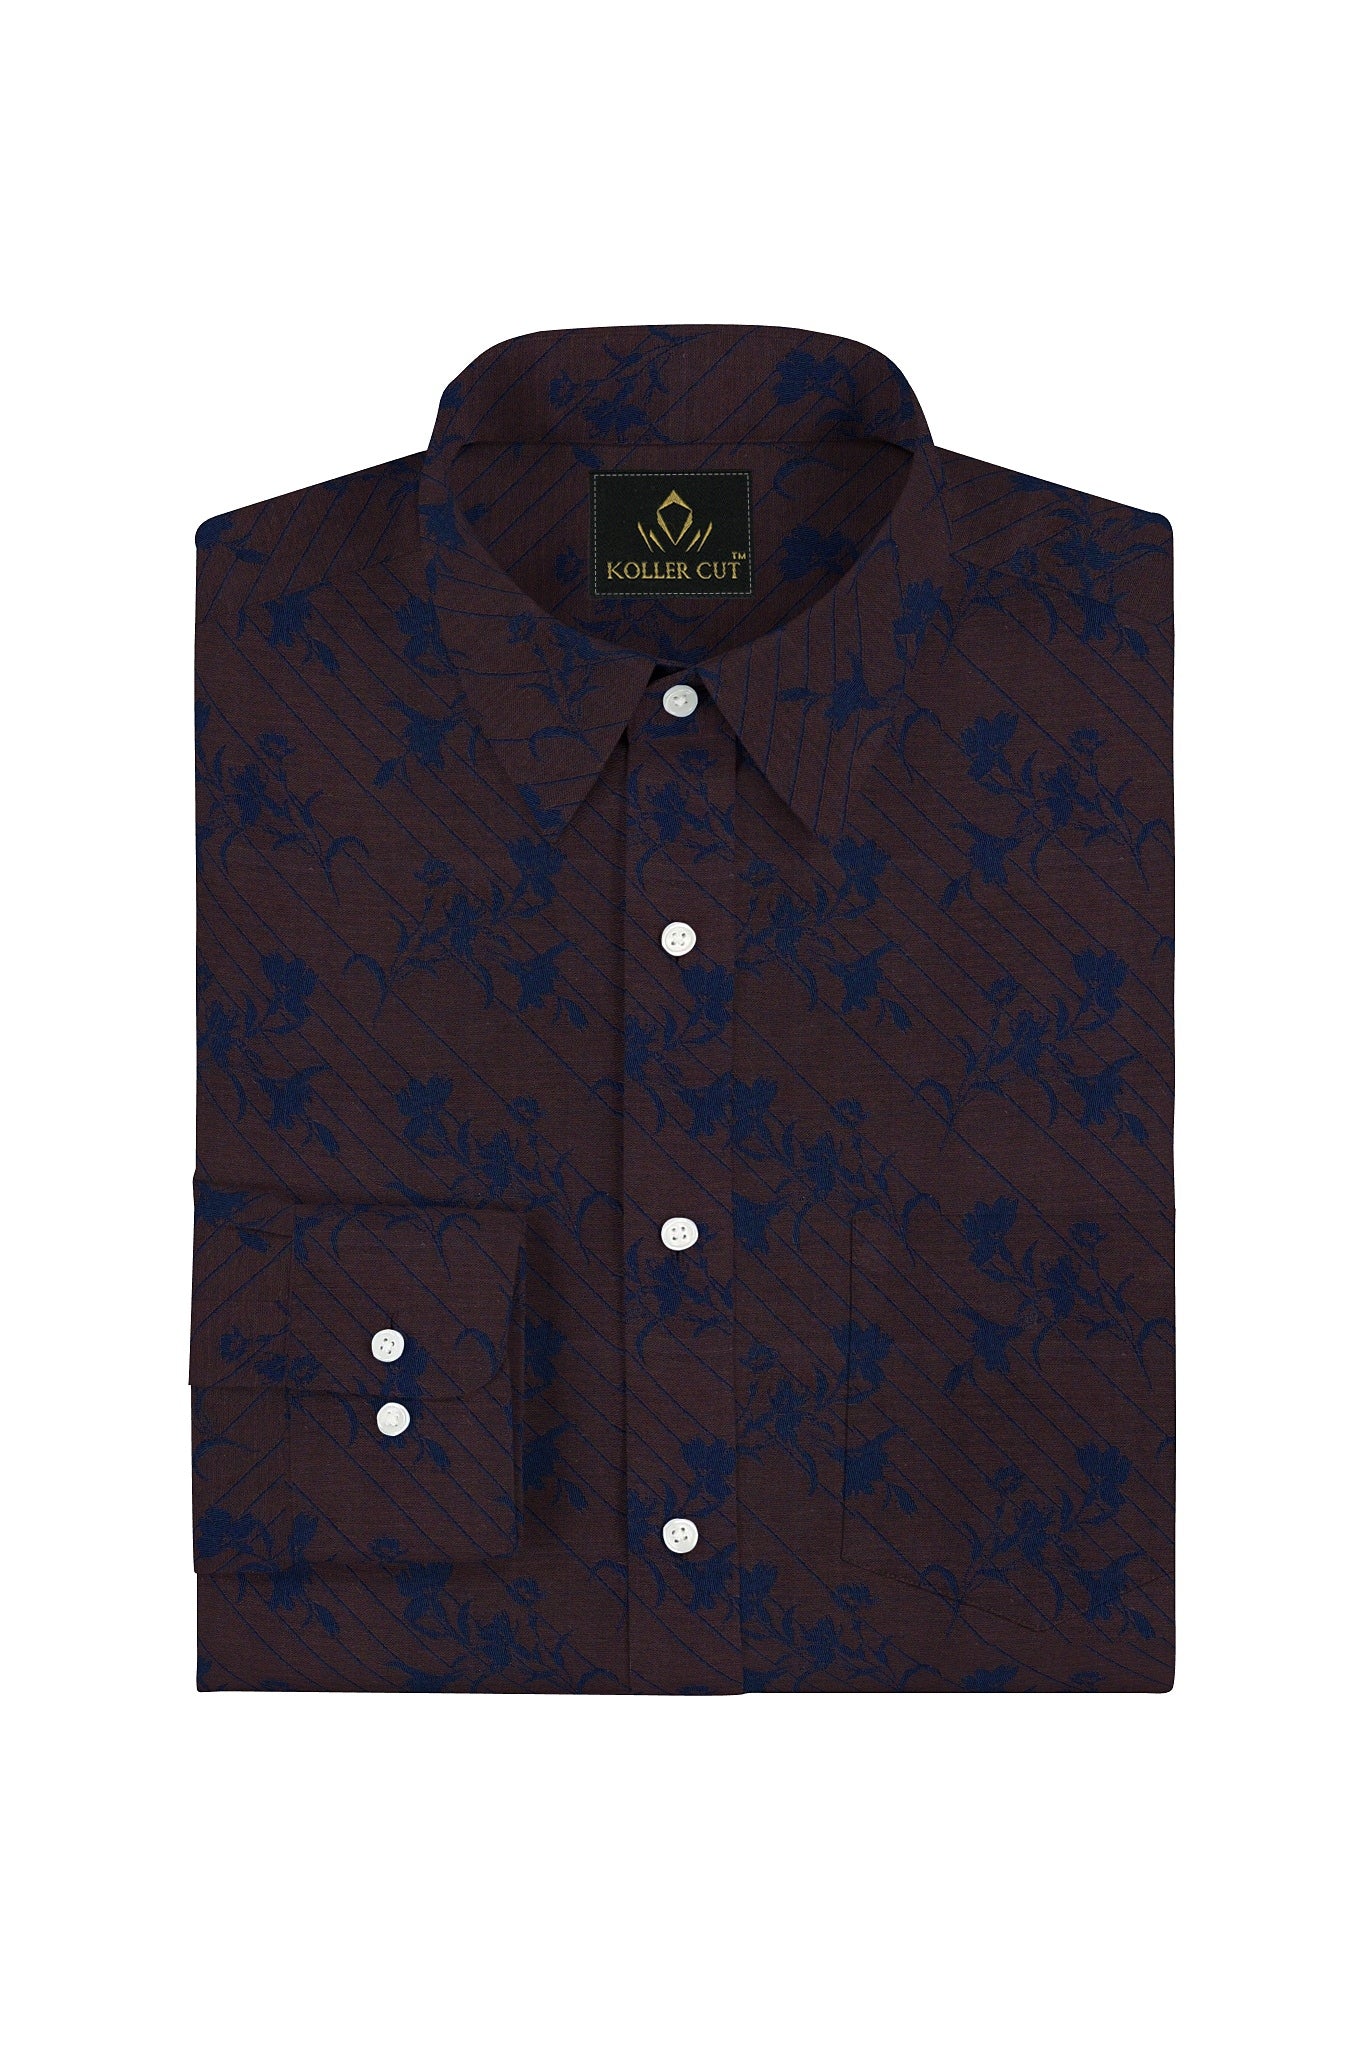 Brunette Brown and Medieval Blue Tulip Plant Jacquard Print Premium Cotton Shirt